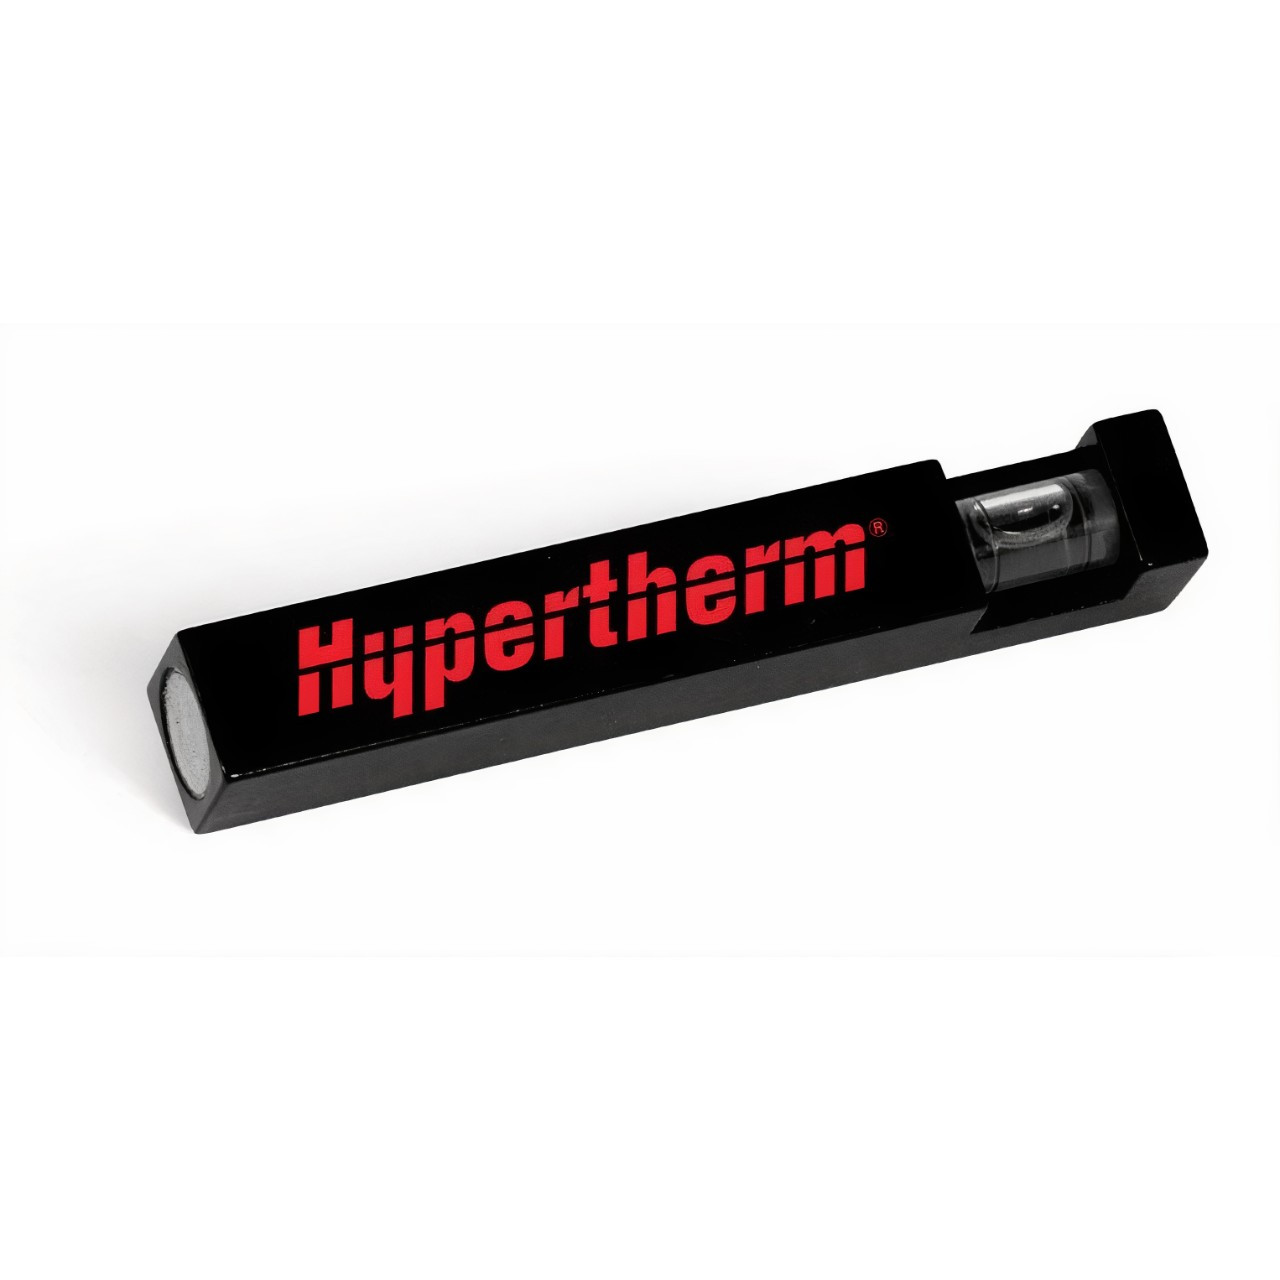 Hypertherm Pocket Level and Measuring Tape Holder